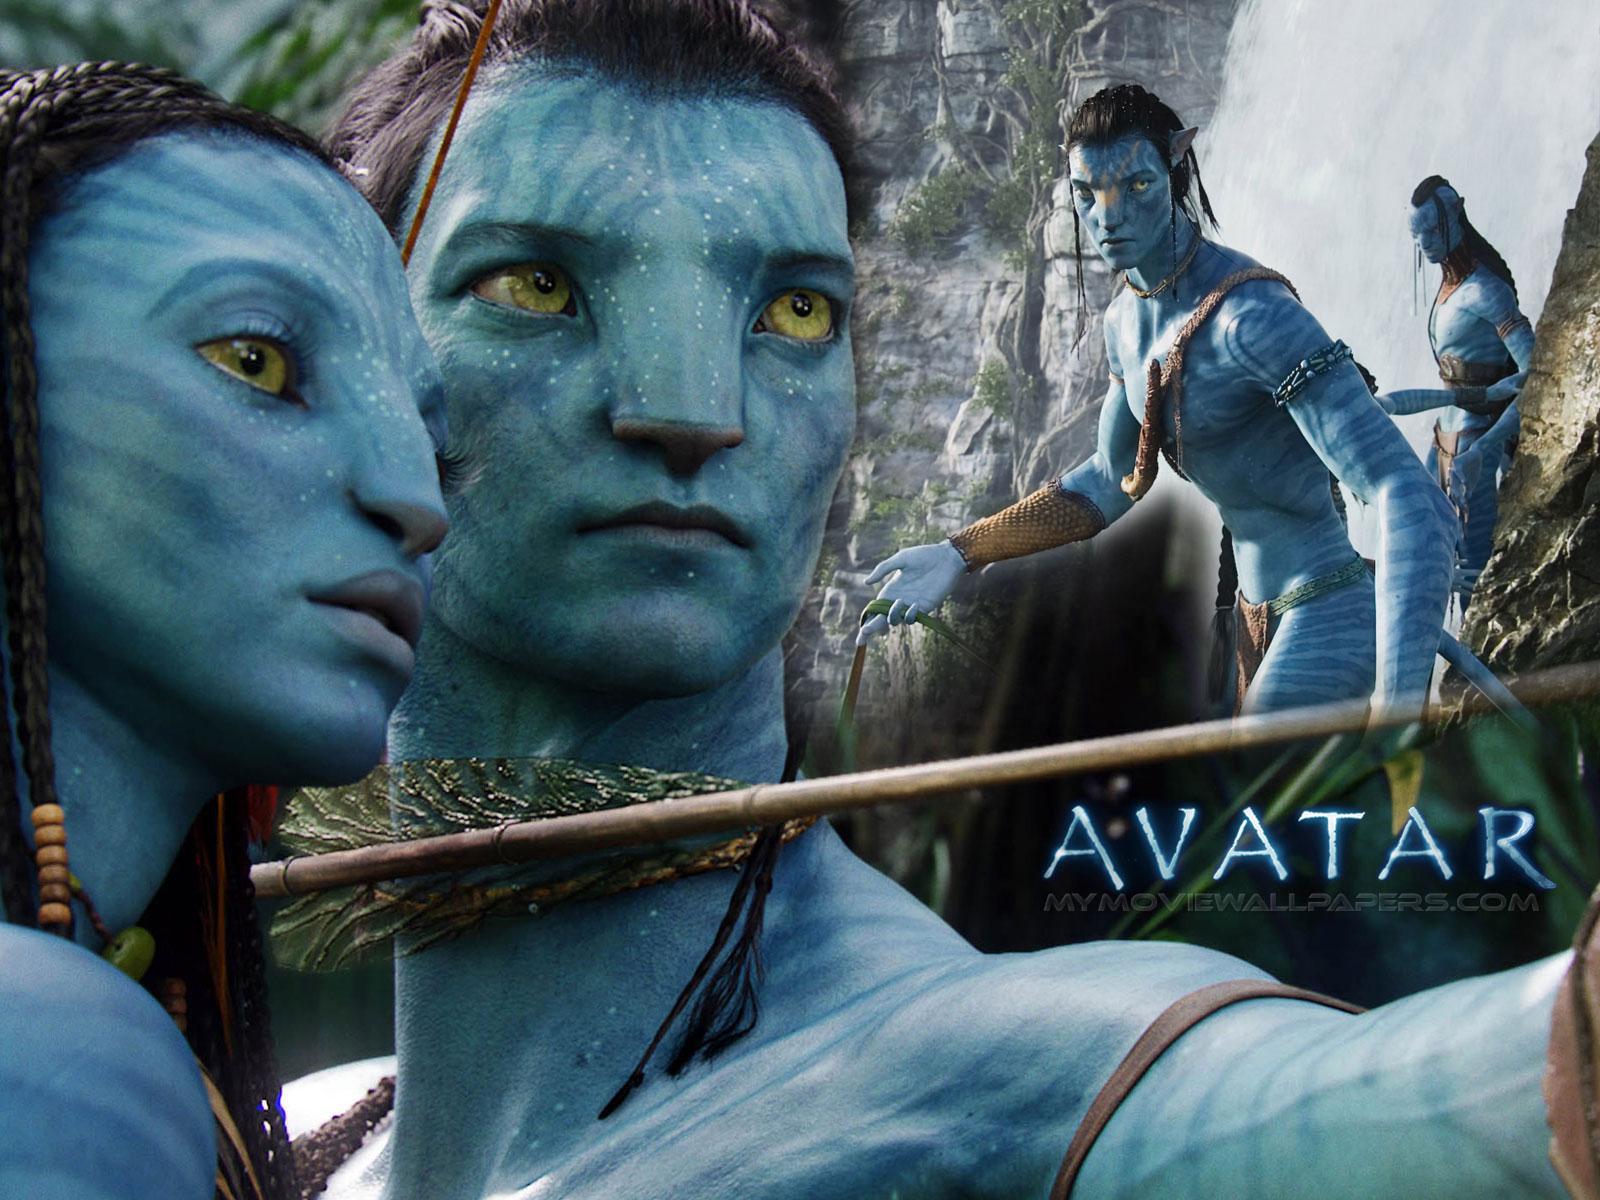 49+] Avatar Movie Wallpaper HD - WallpaperSafari